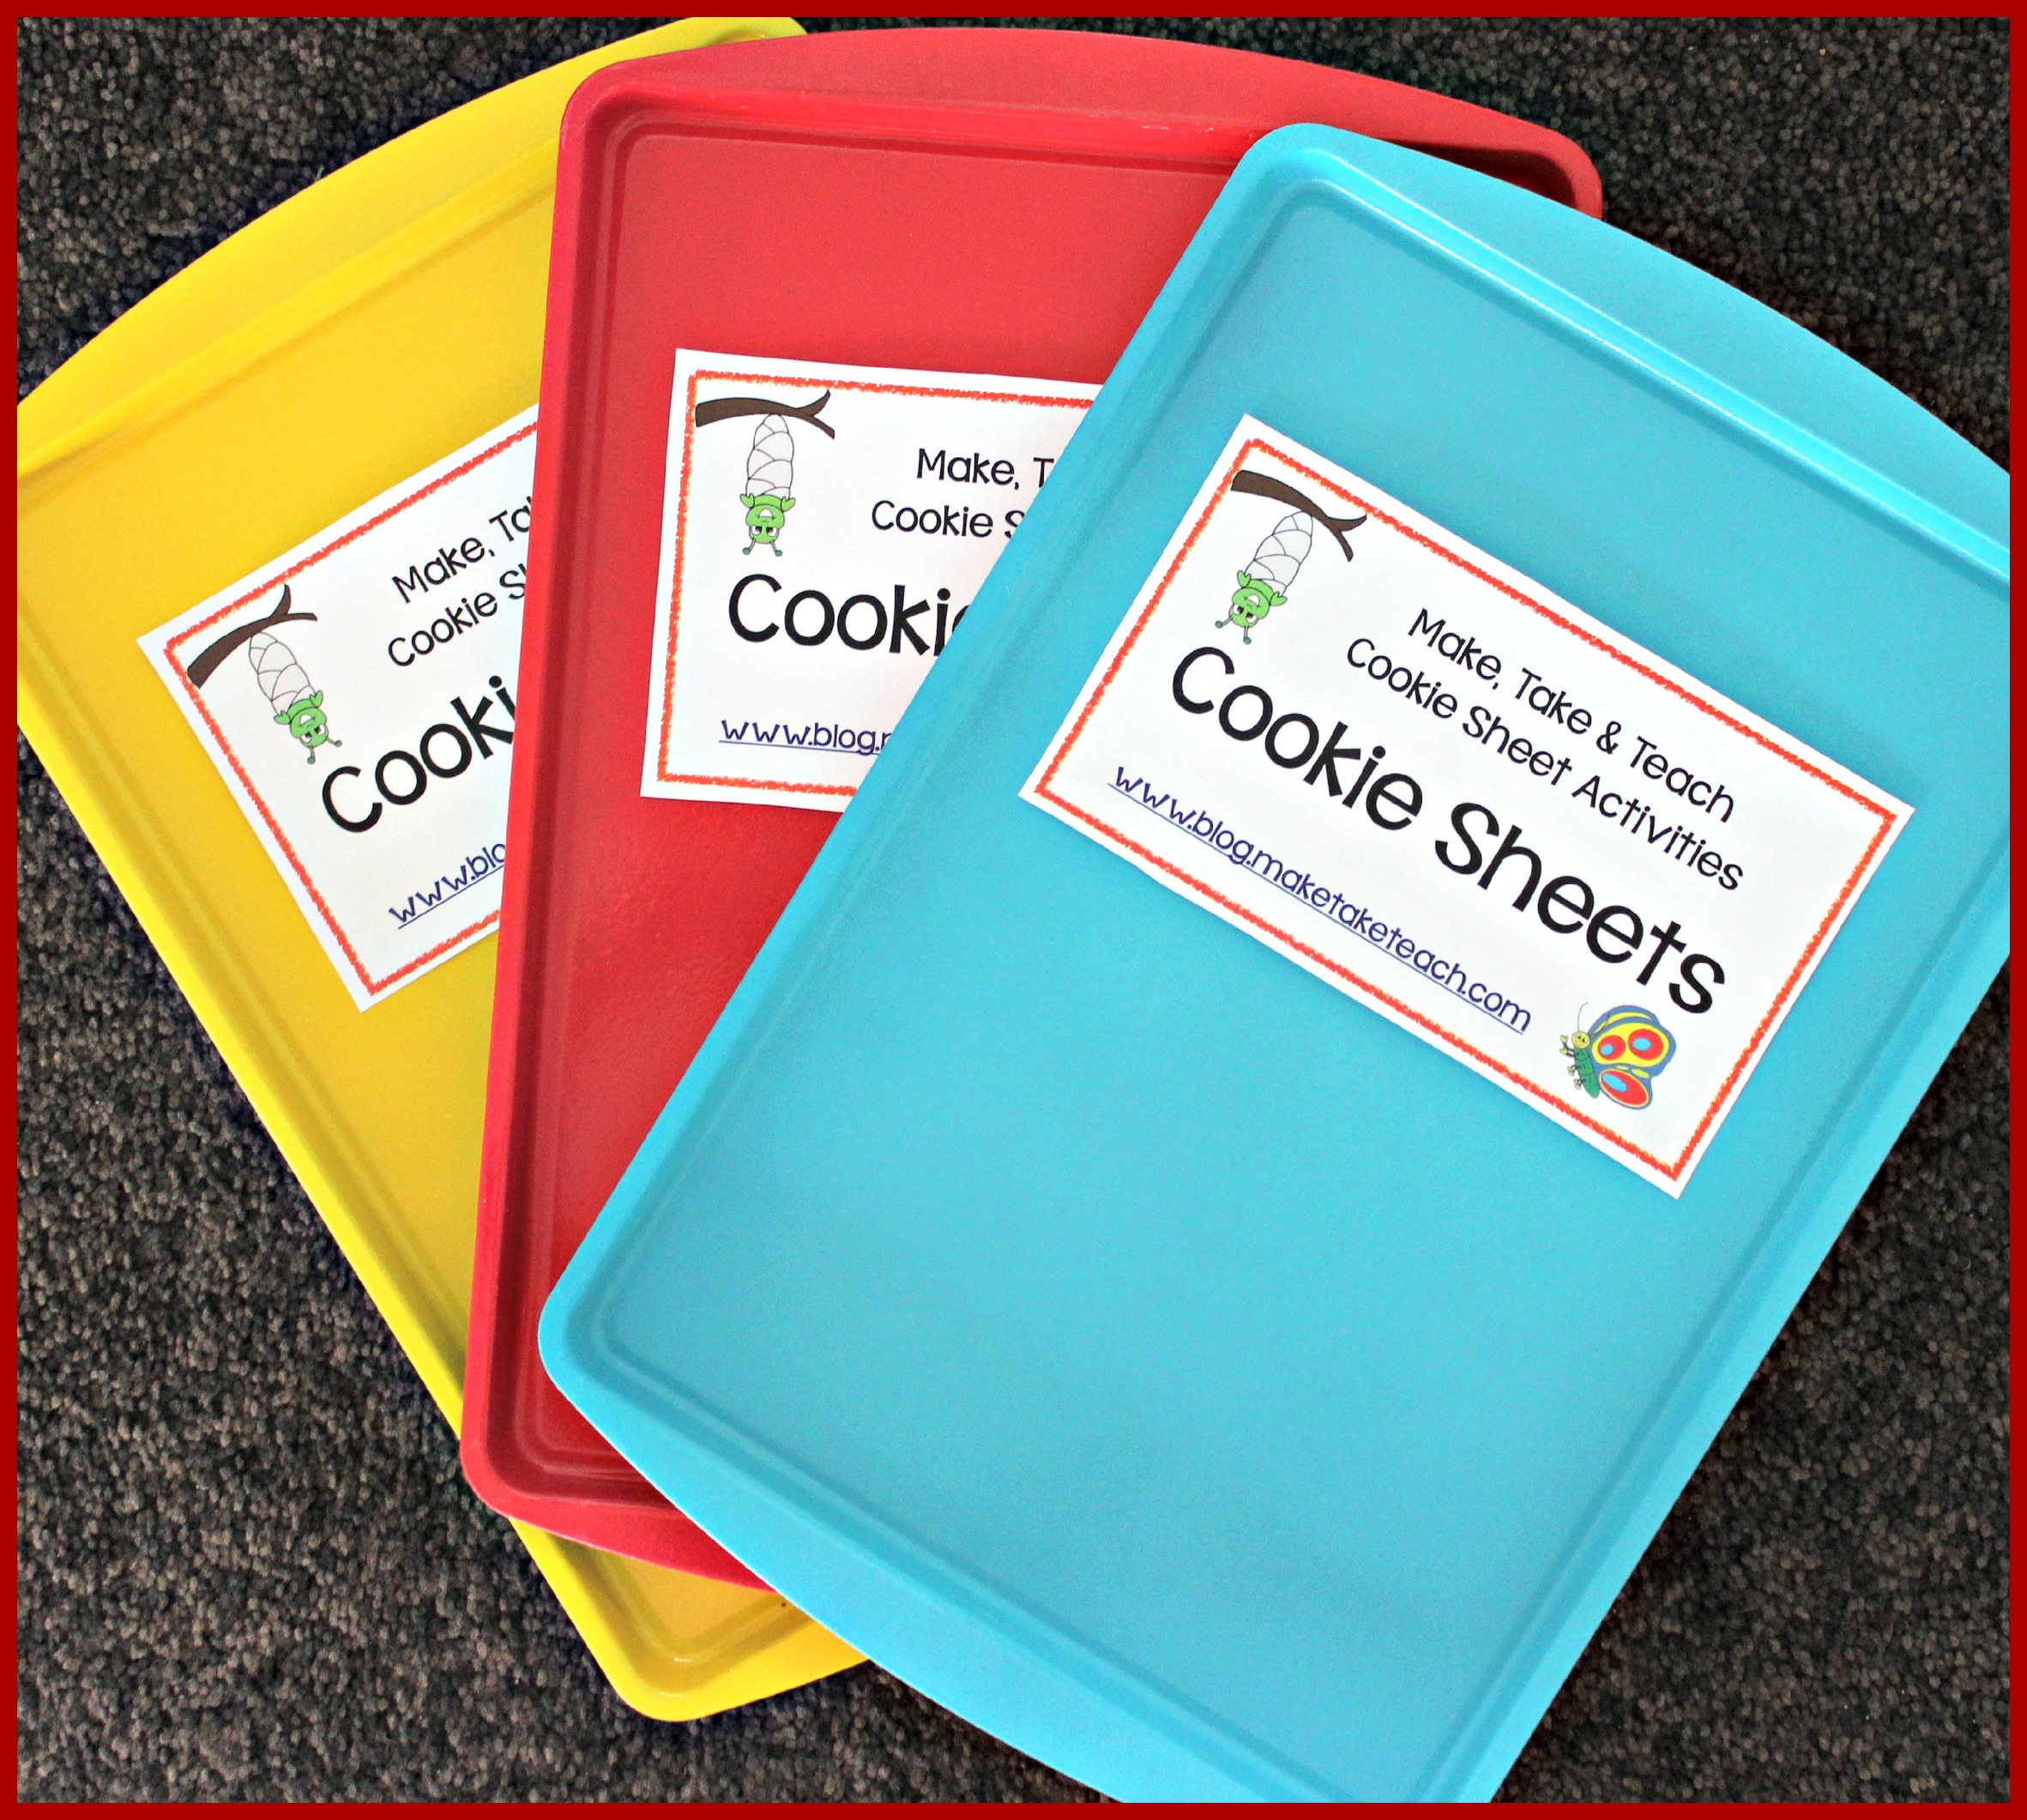 cookie sheet vs cooking sheet